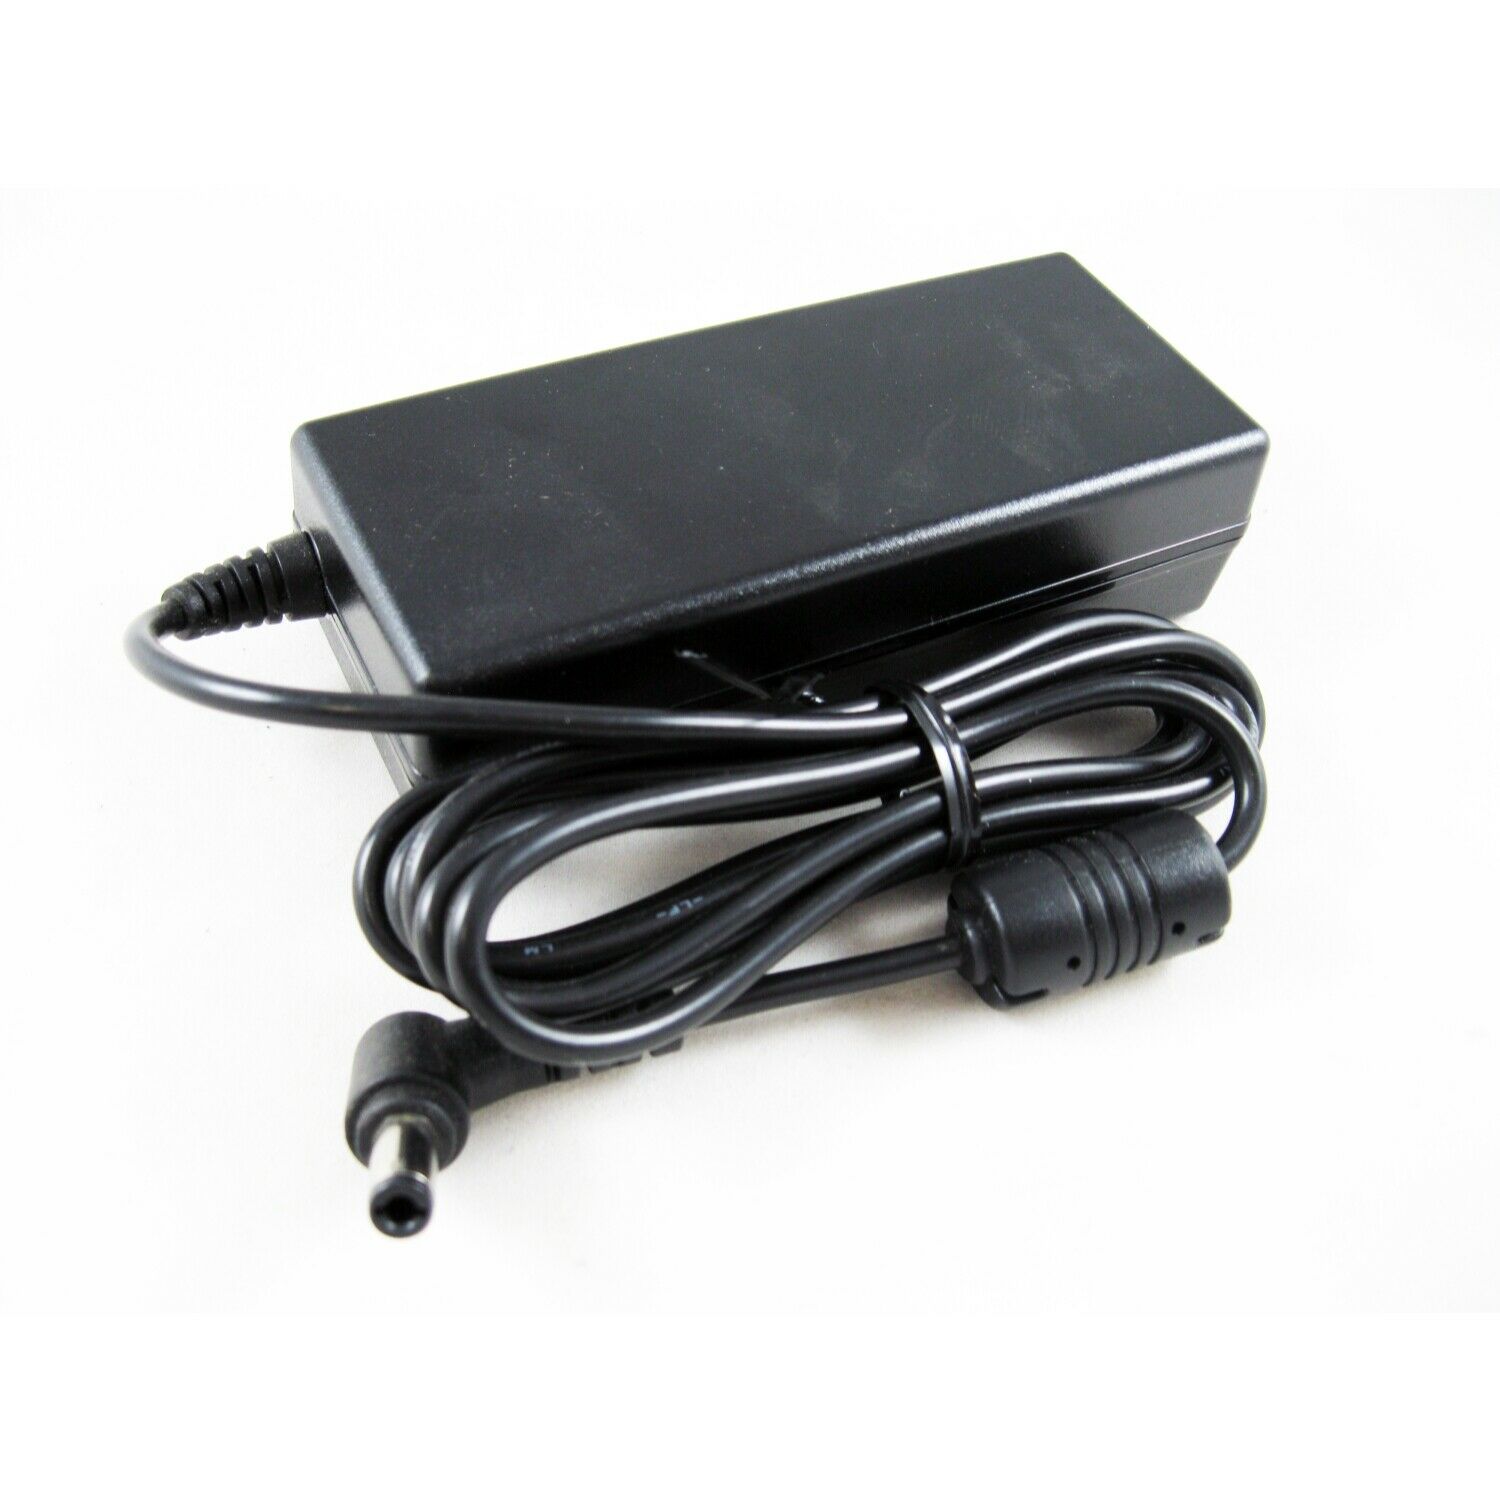 fsp065-asc laptop ac adapter